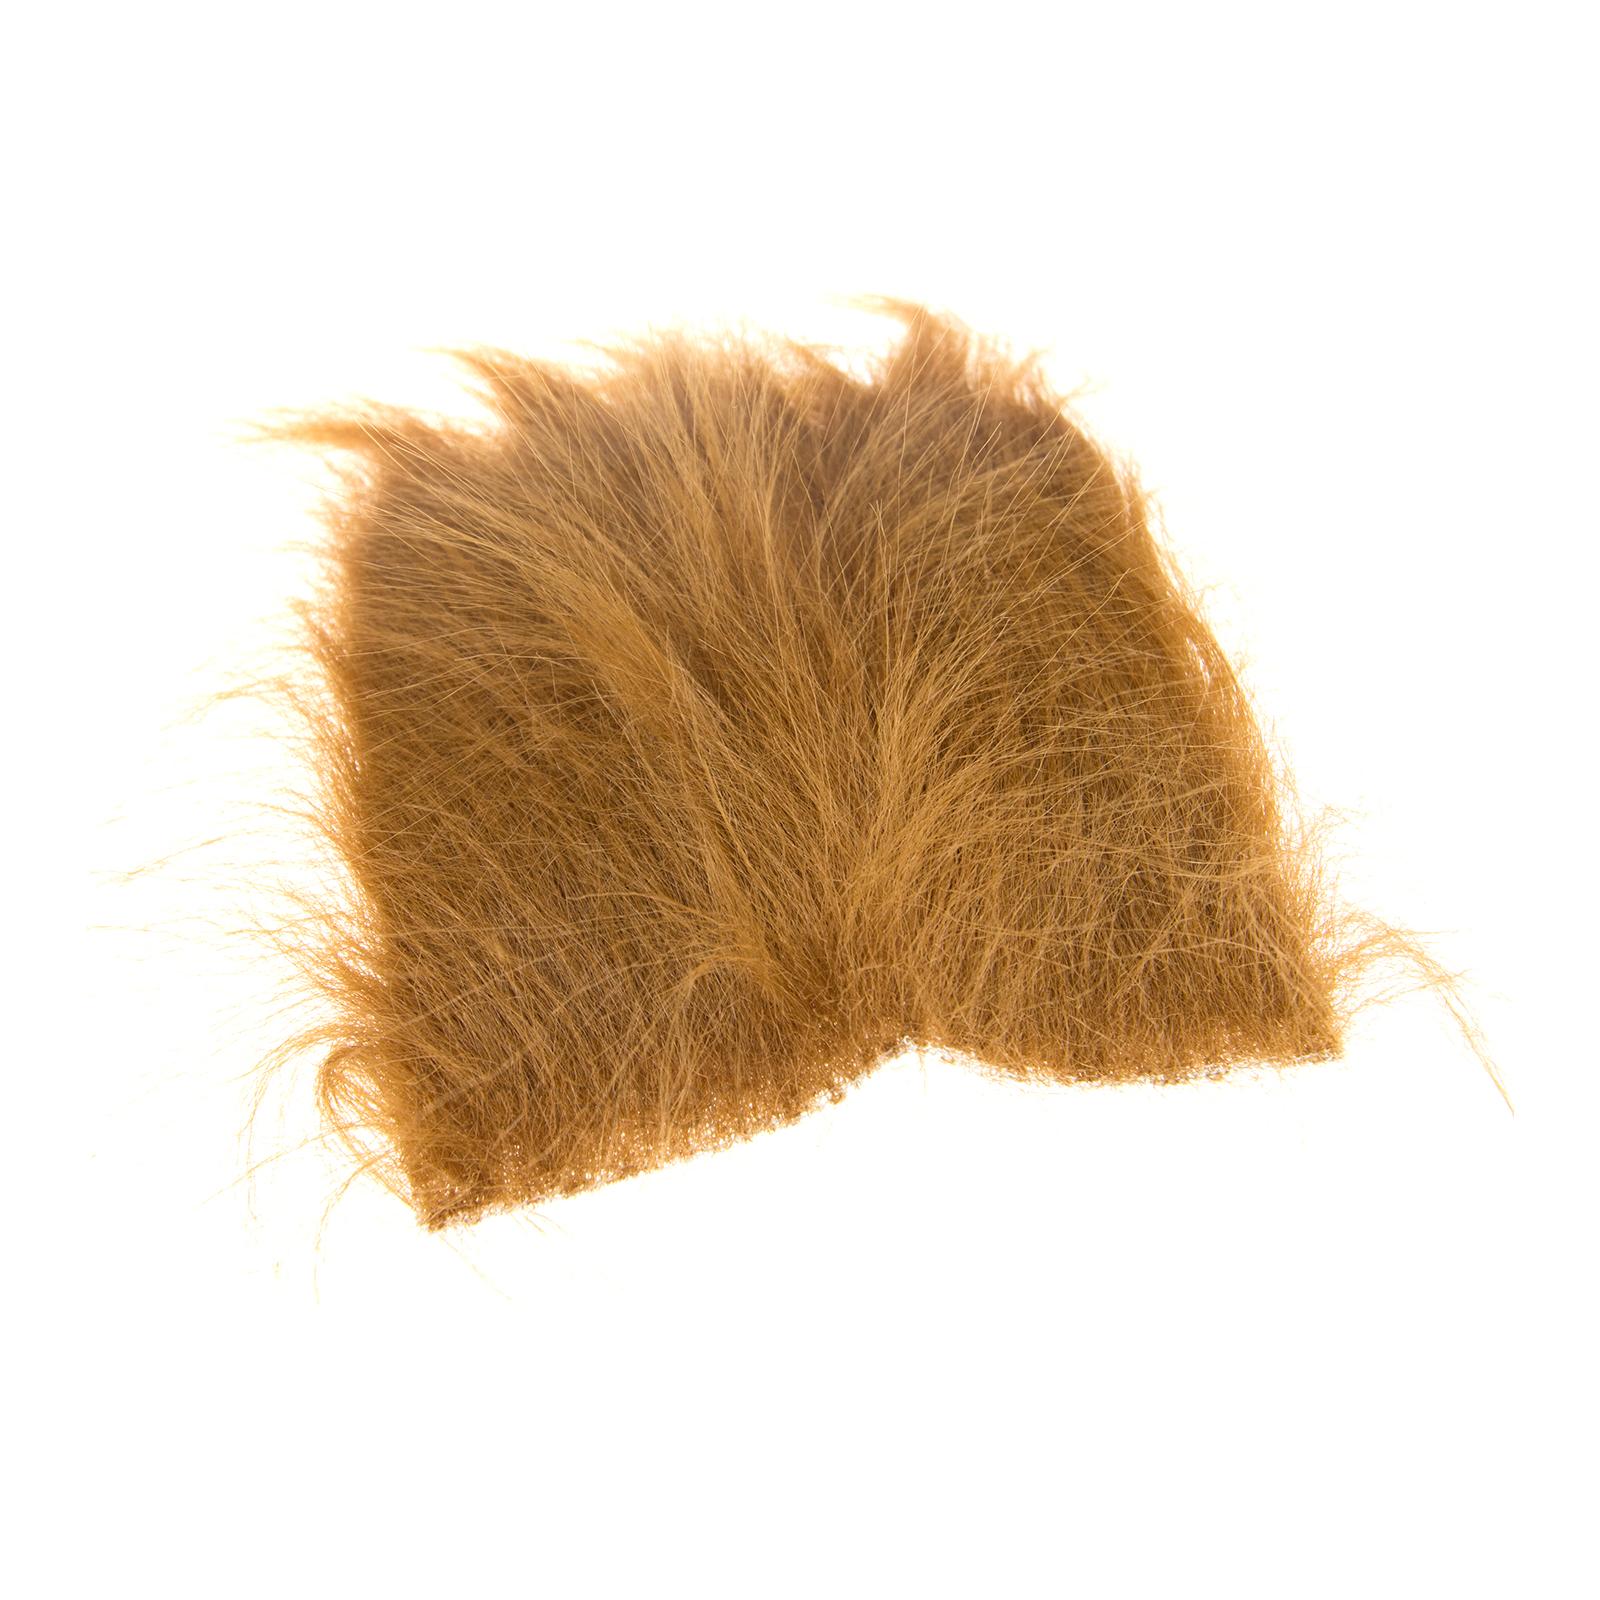 Image of Hareline Dubbin Extra Select Craft Fur - Camel Tan bei fischen.ch